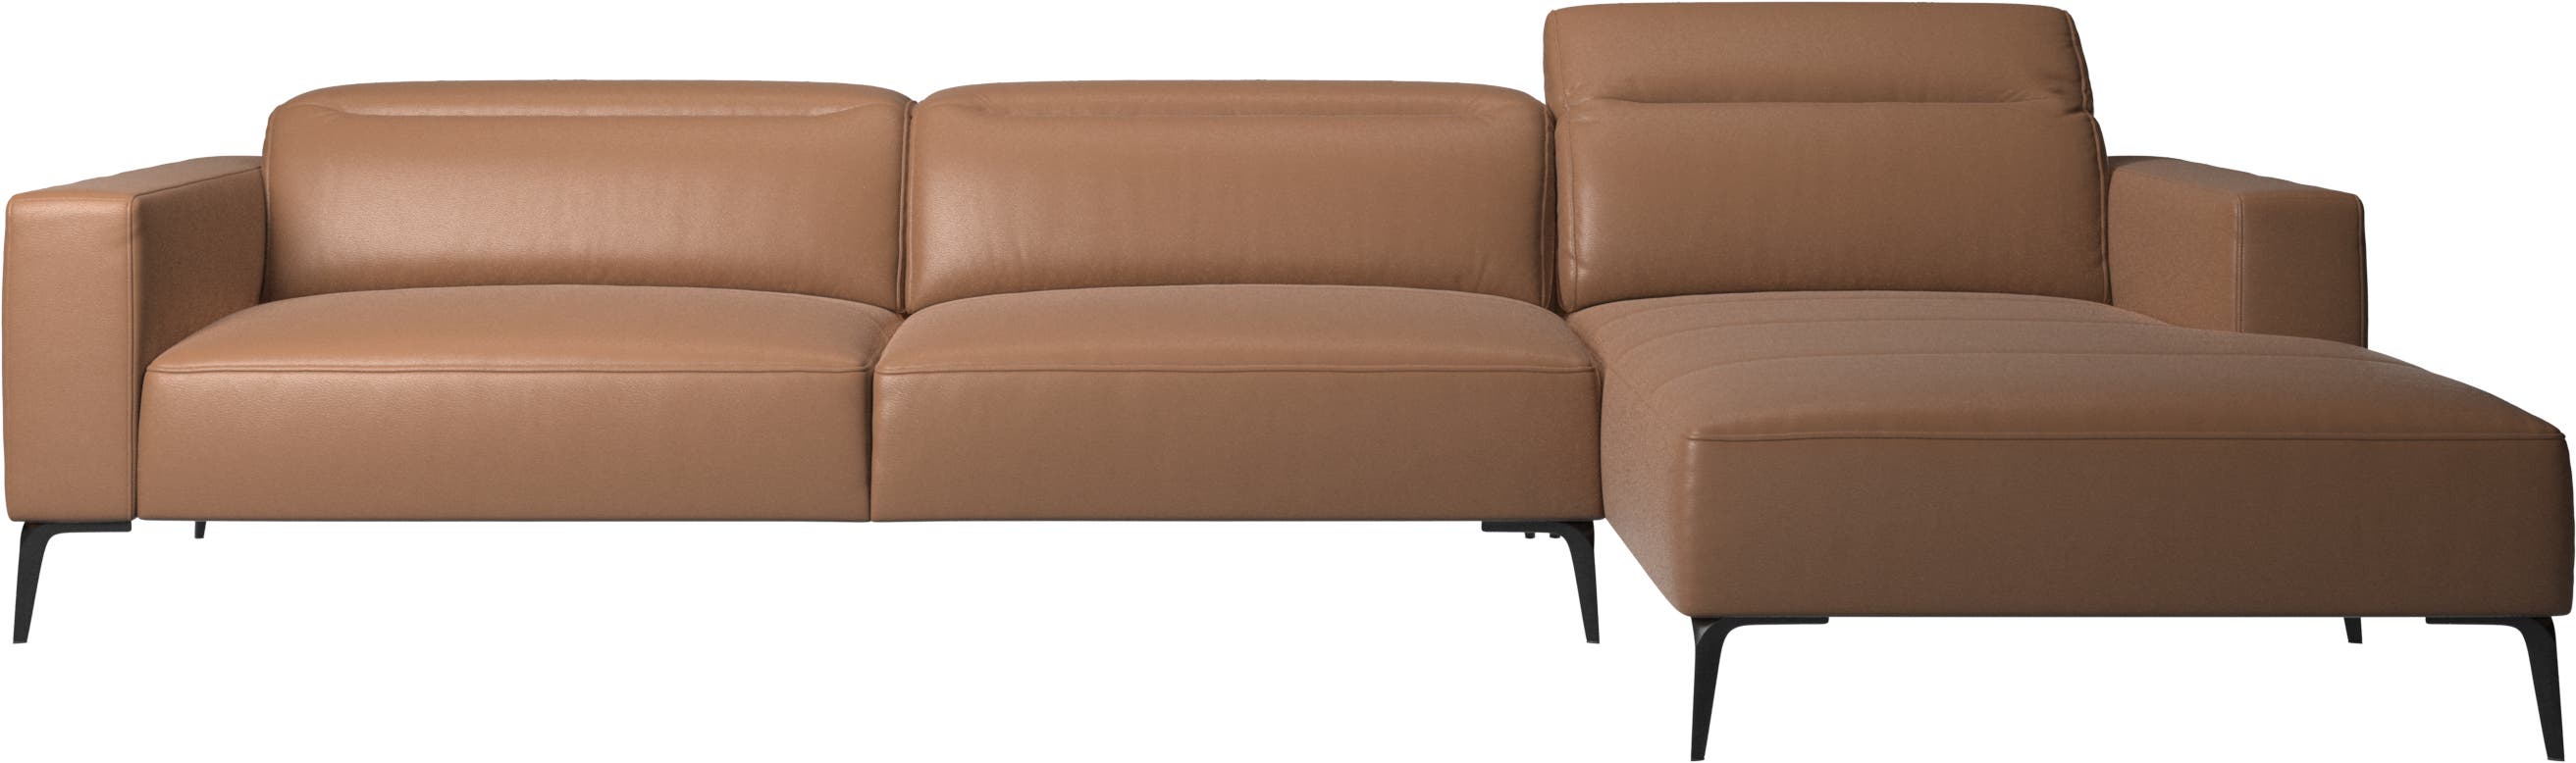 Zürich sofá com módulo chaise-longue